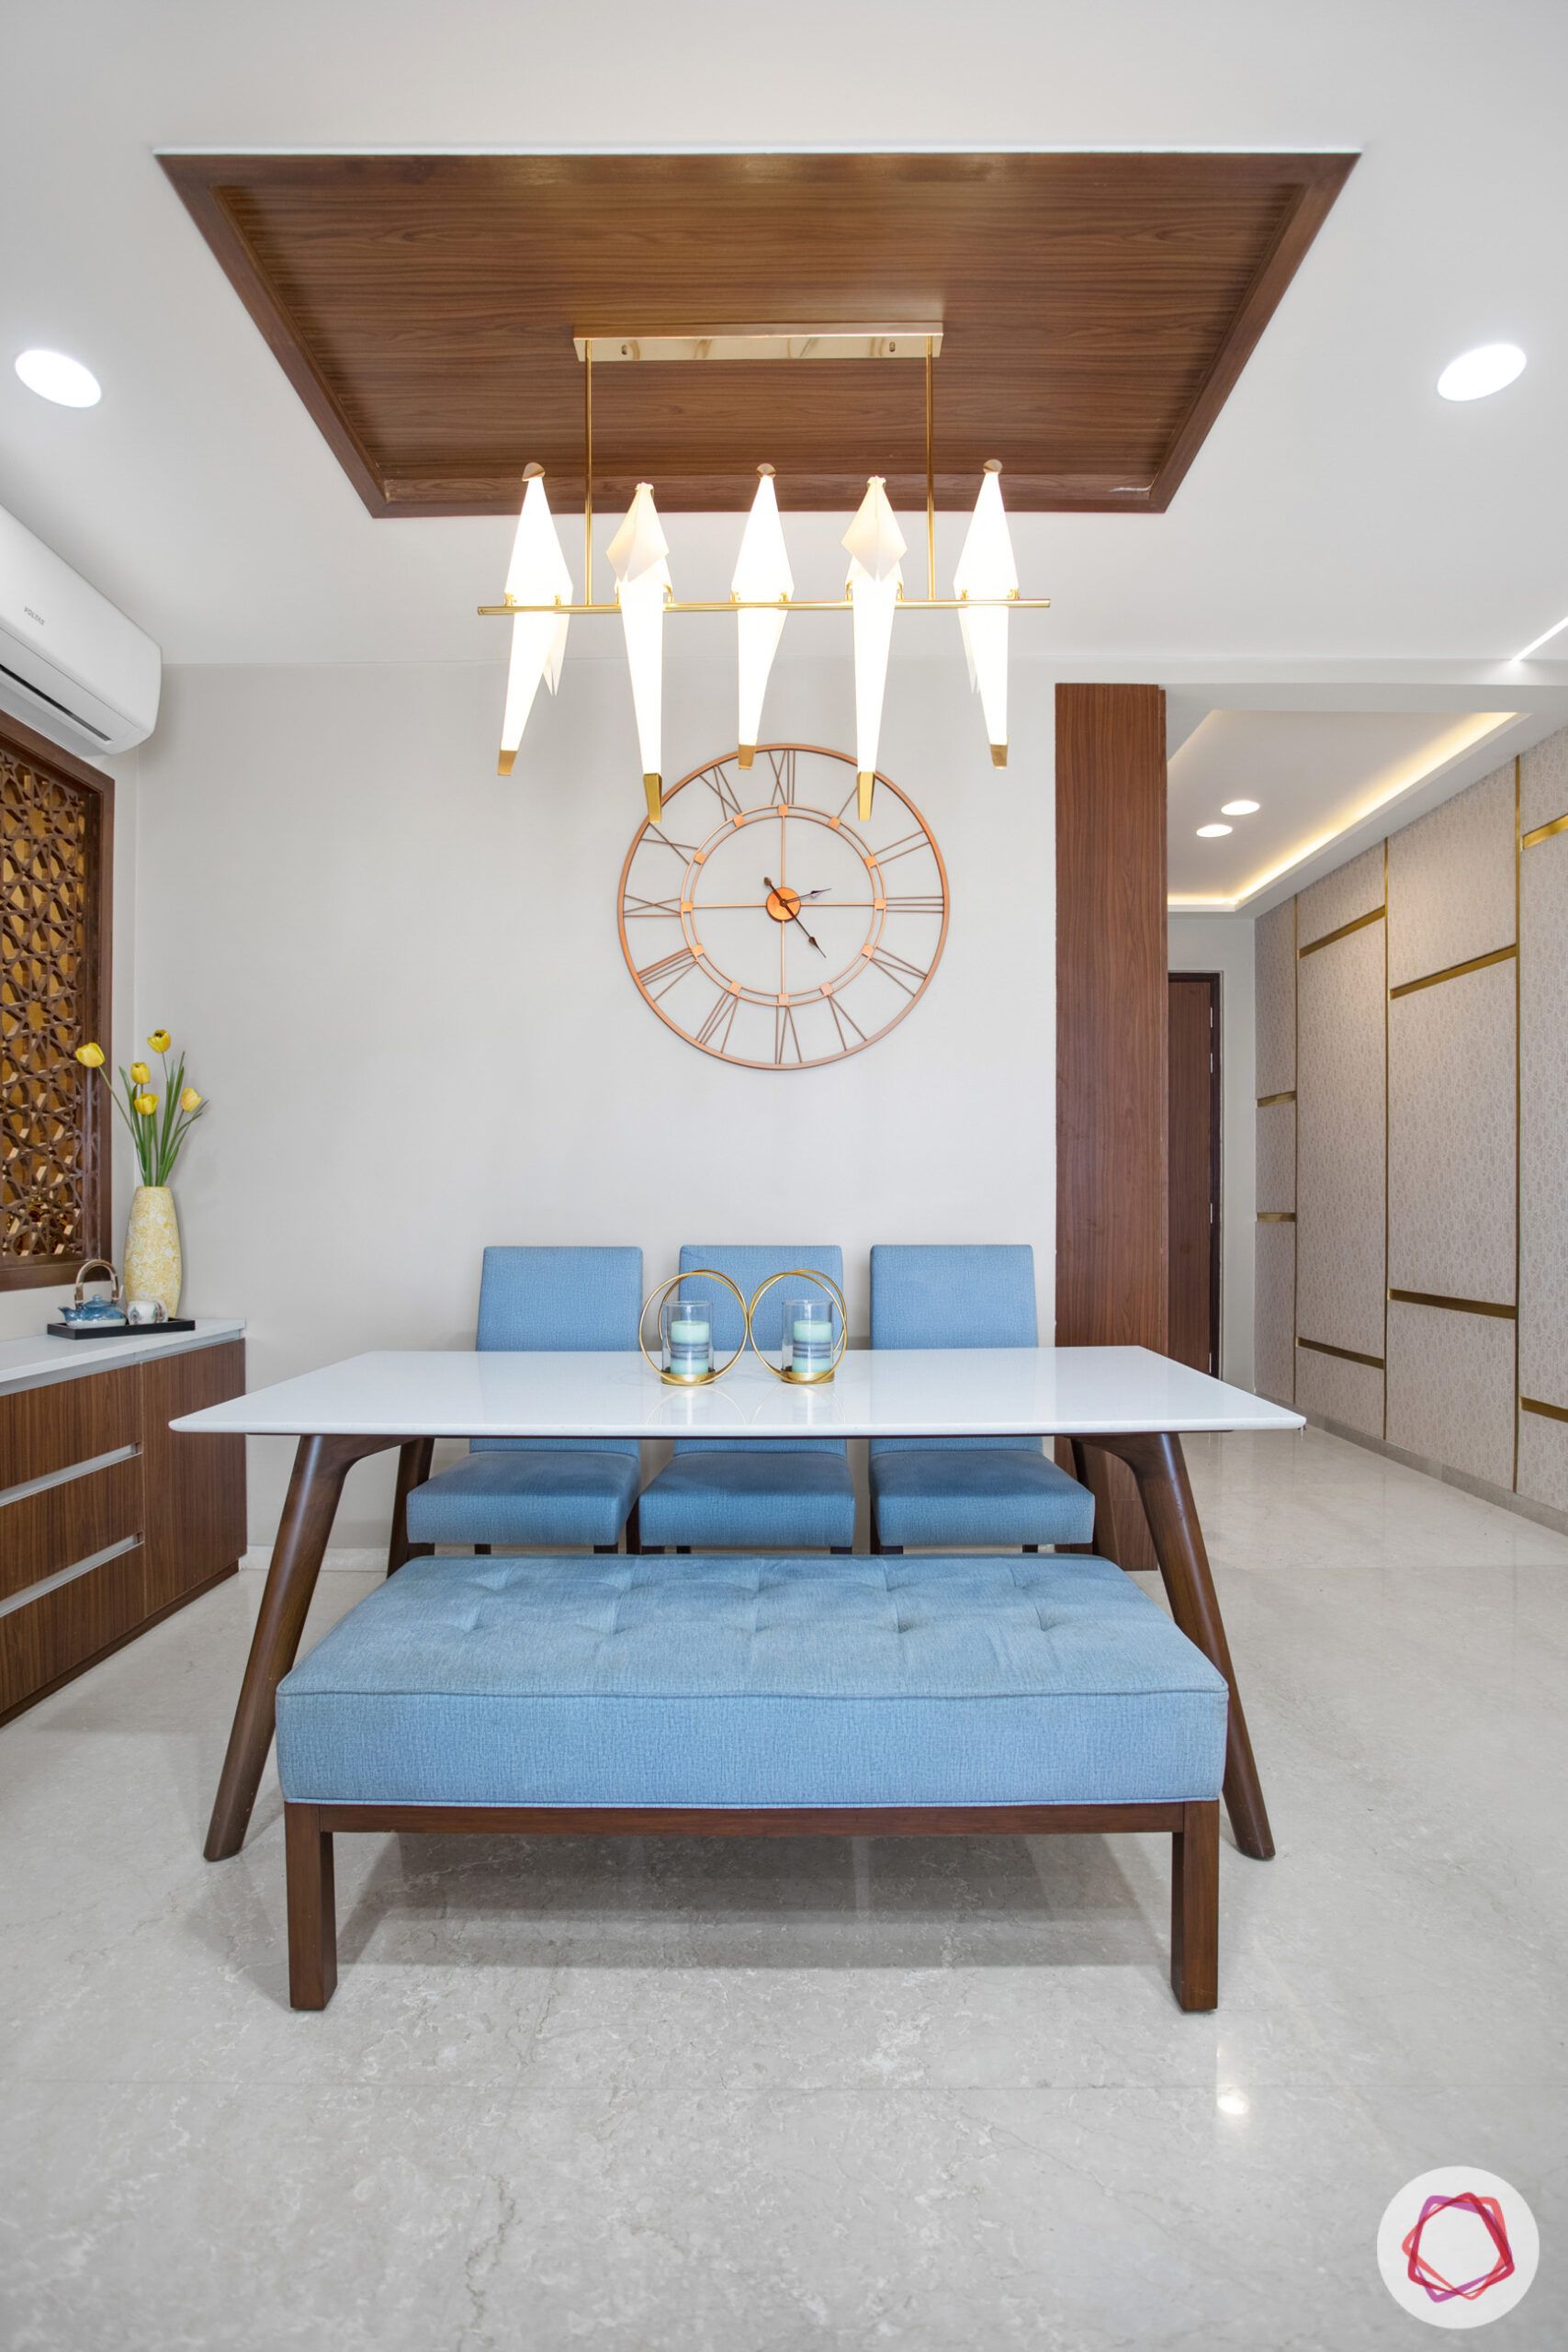 metal fixtures-wooden false ceiling-dining room lighting-clock design